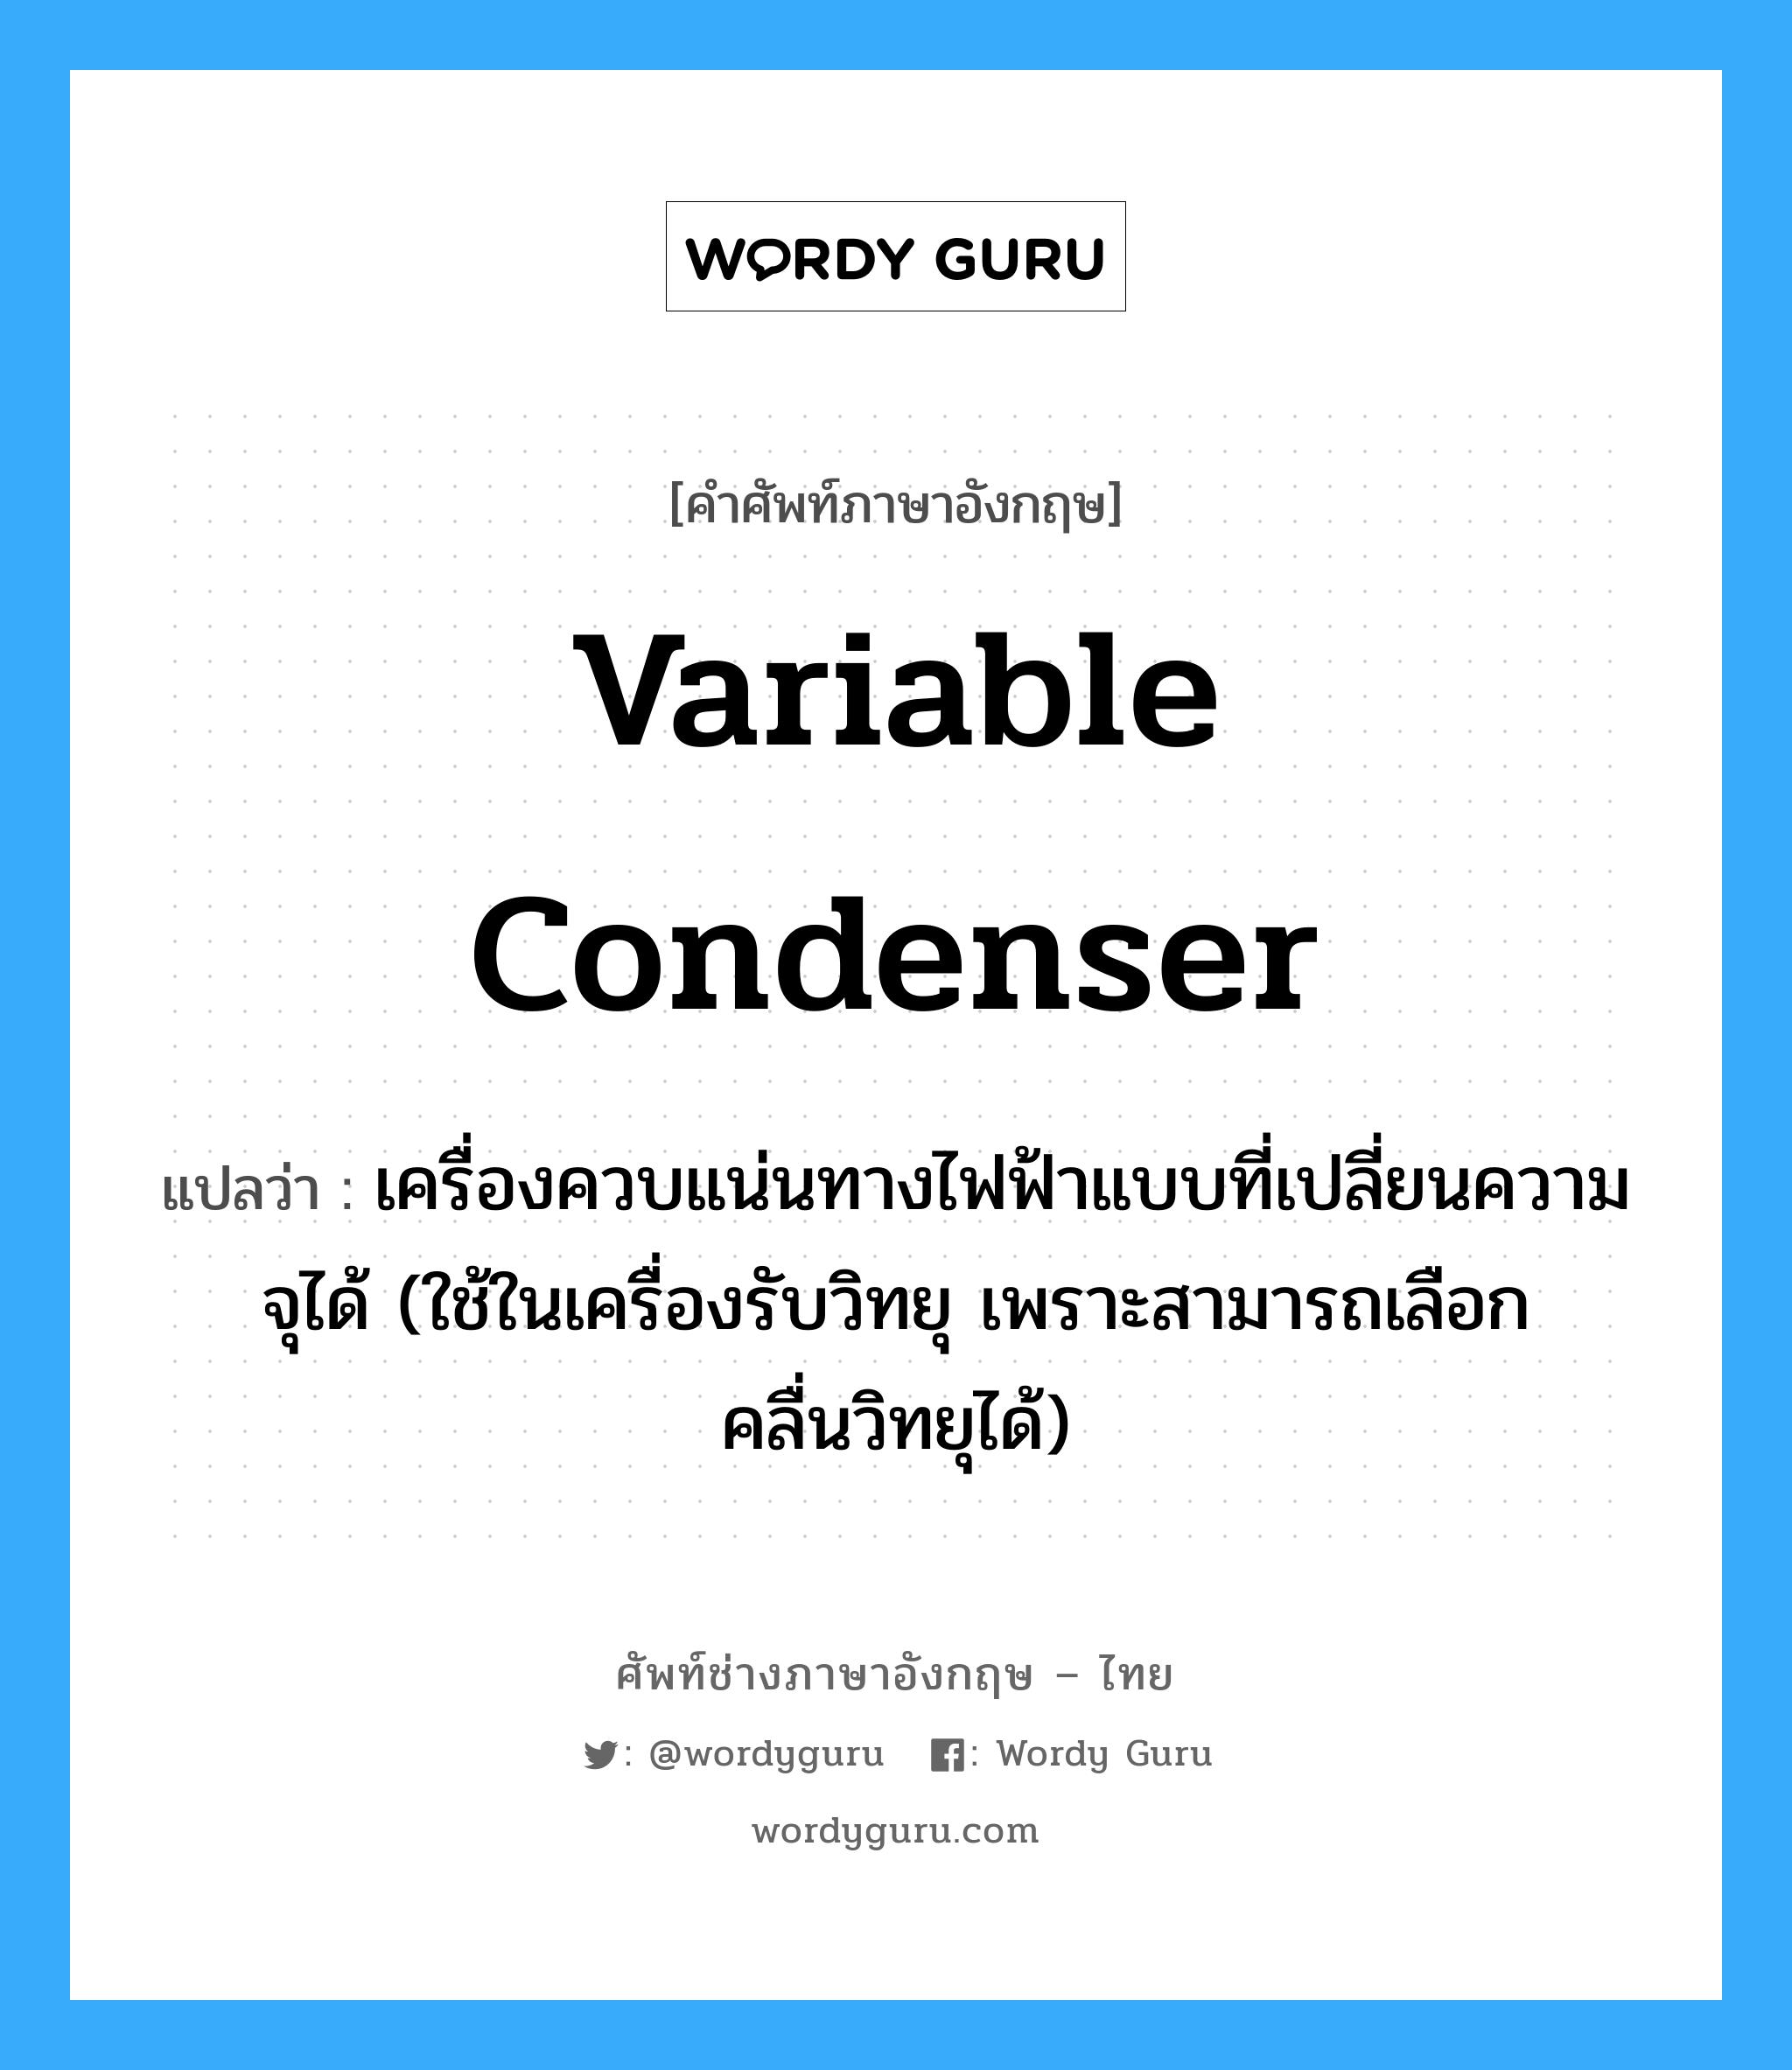 variable condenser แปลว่า?, คำศัพท์ช่างภาษาอังกฤษ - ไทย variable condenser คำศัพท์ภาษาอังกฤษ variable condenser แปลว่า เครื่องควบแน่นทางไฟฟ้าแบบที่เปลี่ยนความจุได้ (ใช้ในเครื่องรับวิทยุ เพราะสามารถเลือกคลื่นวิทยุได้)